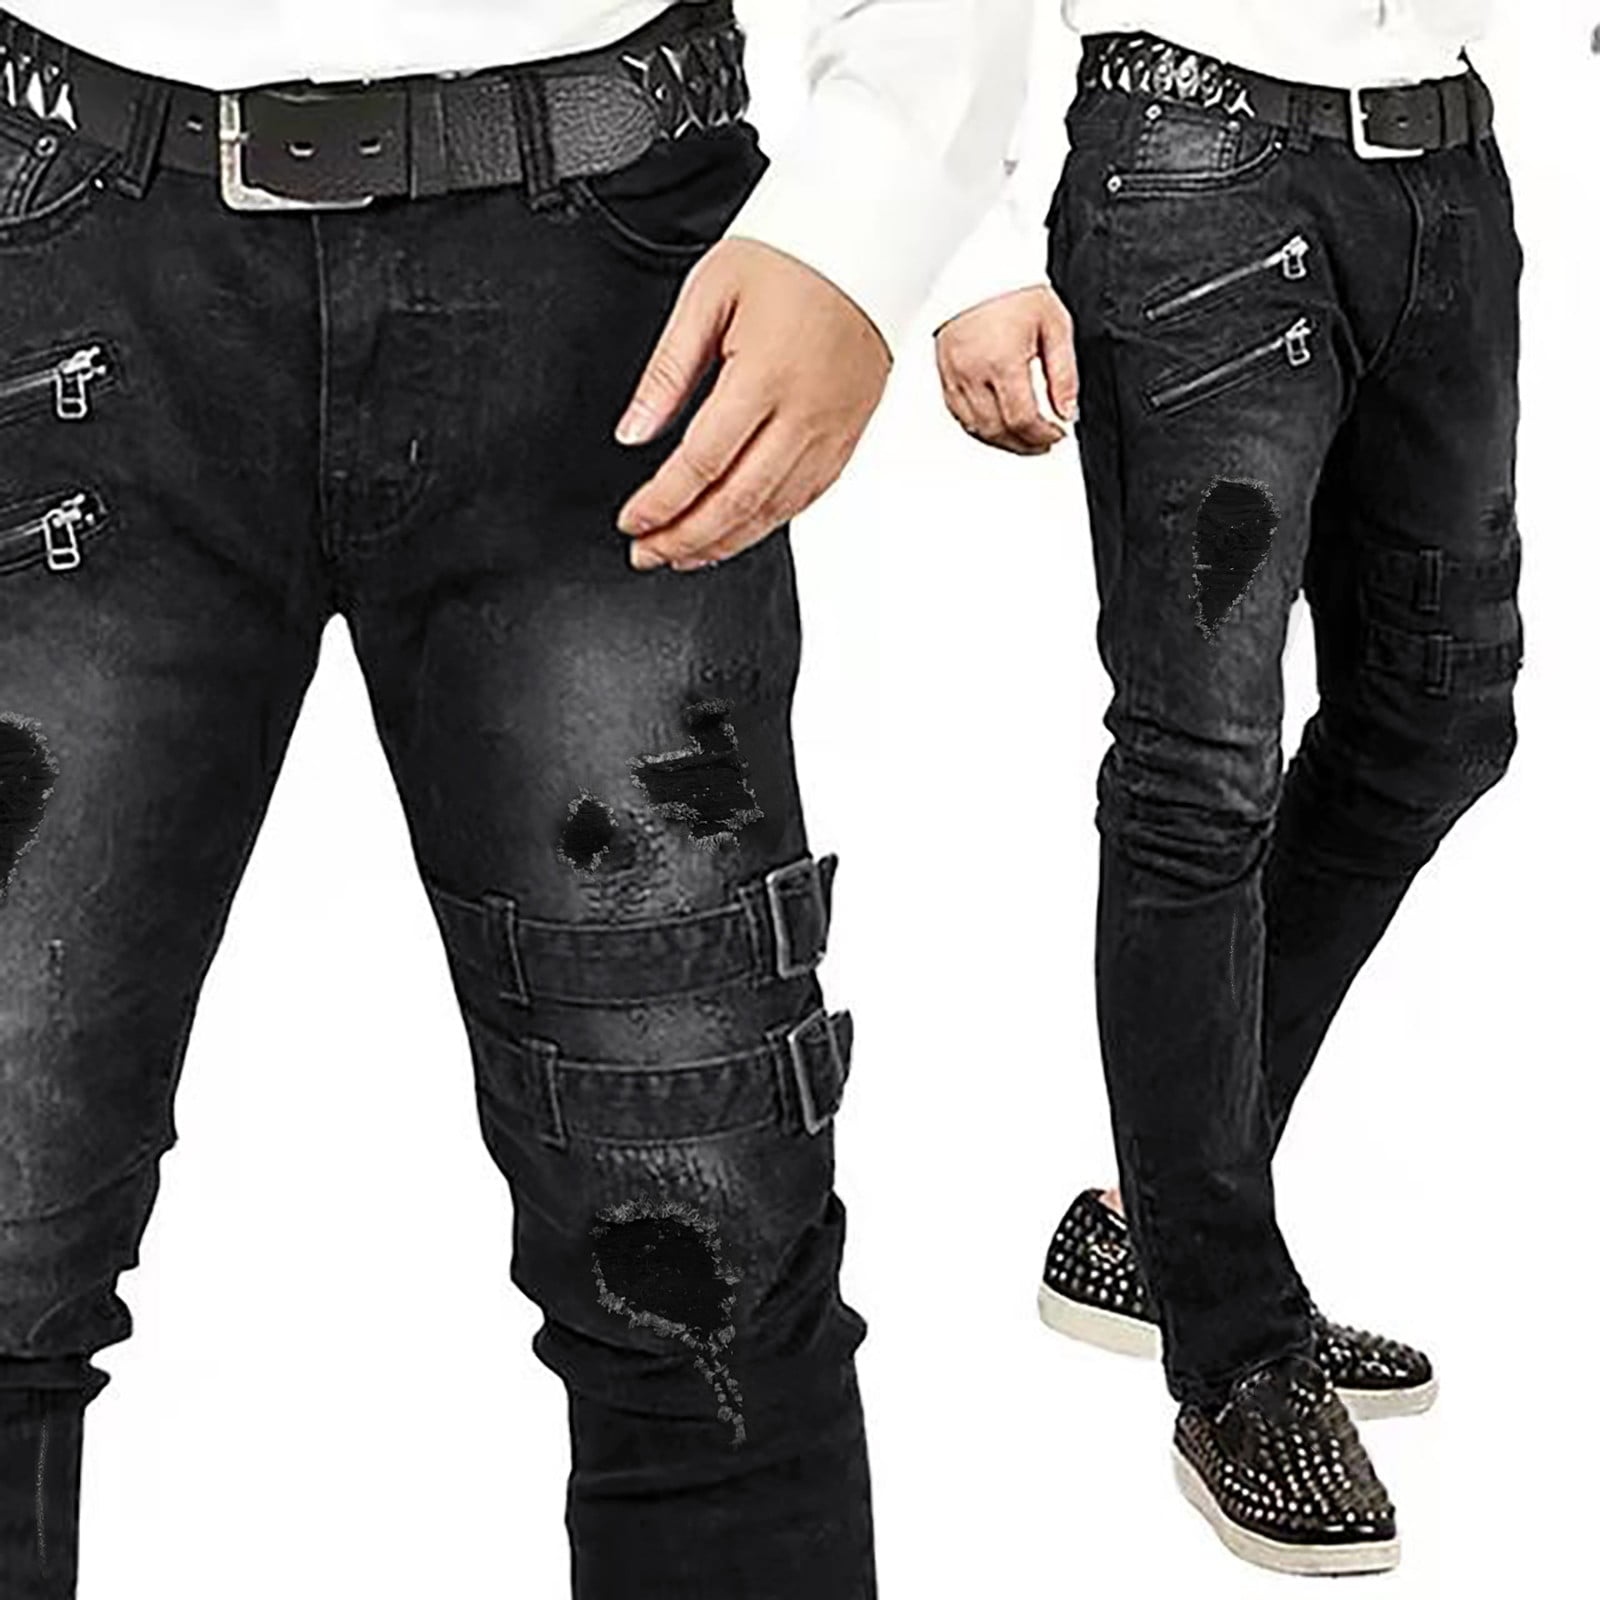 dtydtpe mens jeans men's fashion casual solid denim straight pants zipper  fly pocket jeans trousers cargo pants for men